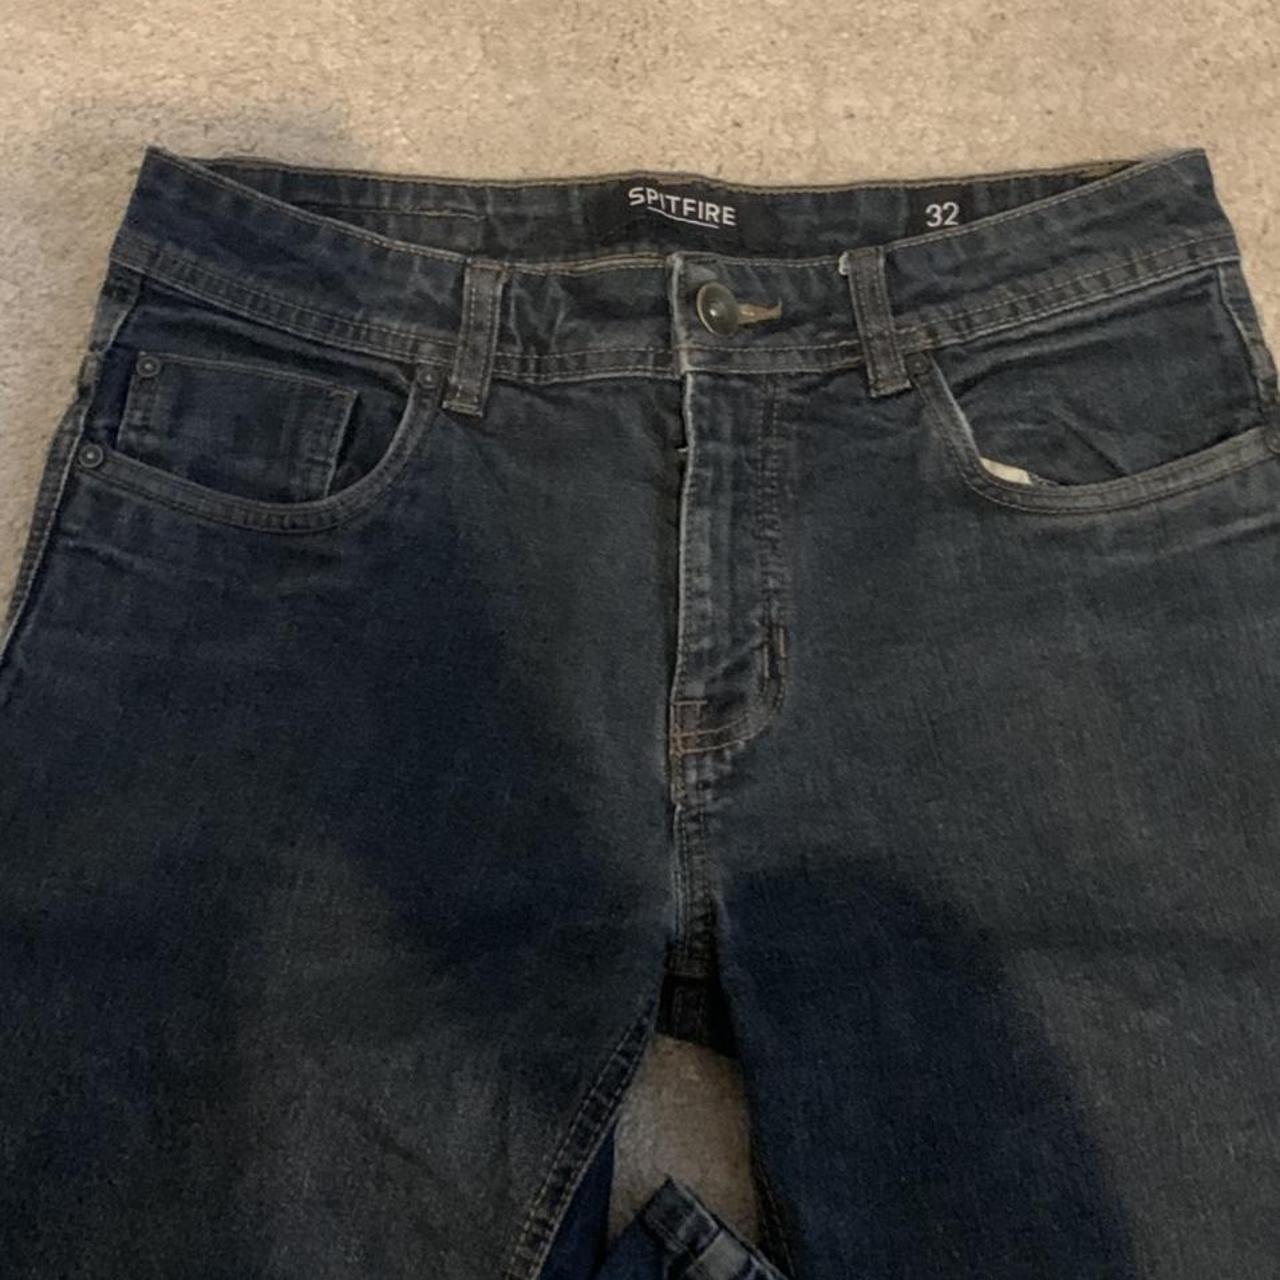 Spitfire Jeans Dark Denim Straight leg jeans - Depop